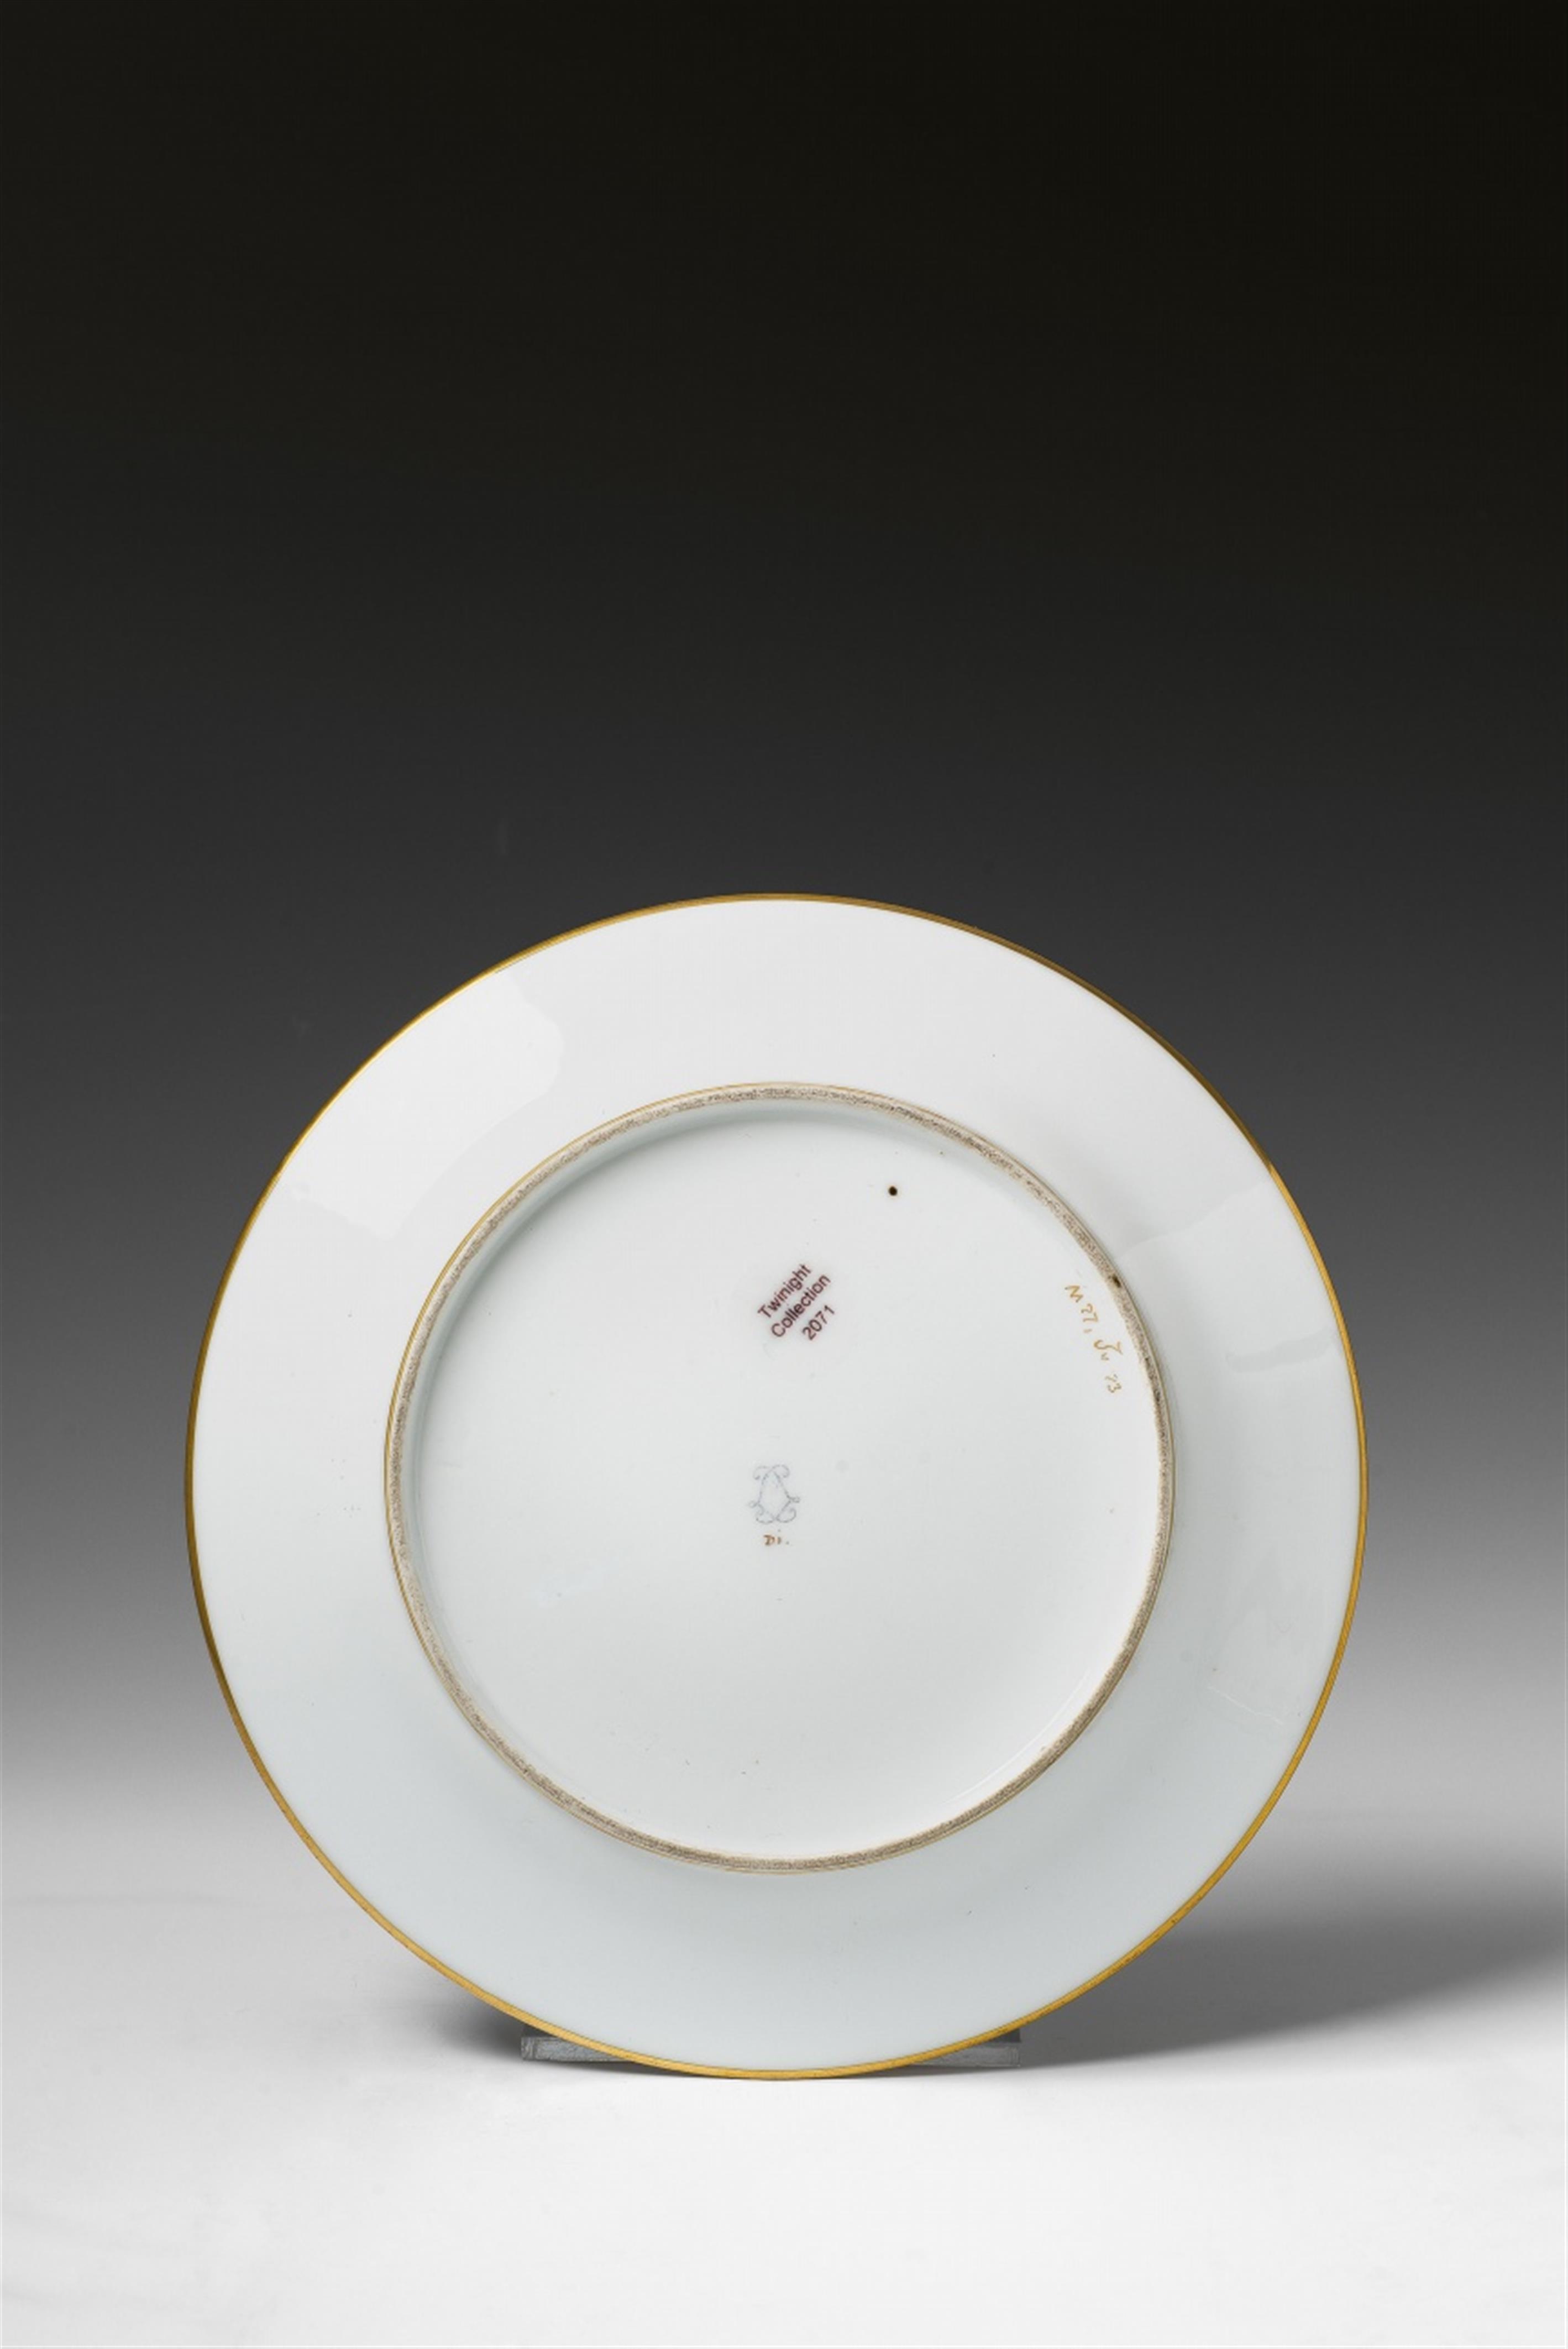 A Sèvres porcelain plate with a cameo portrait of Aeneas - image-3